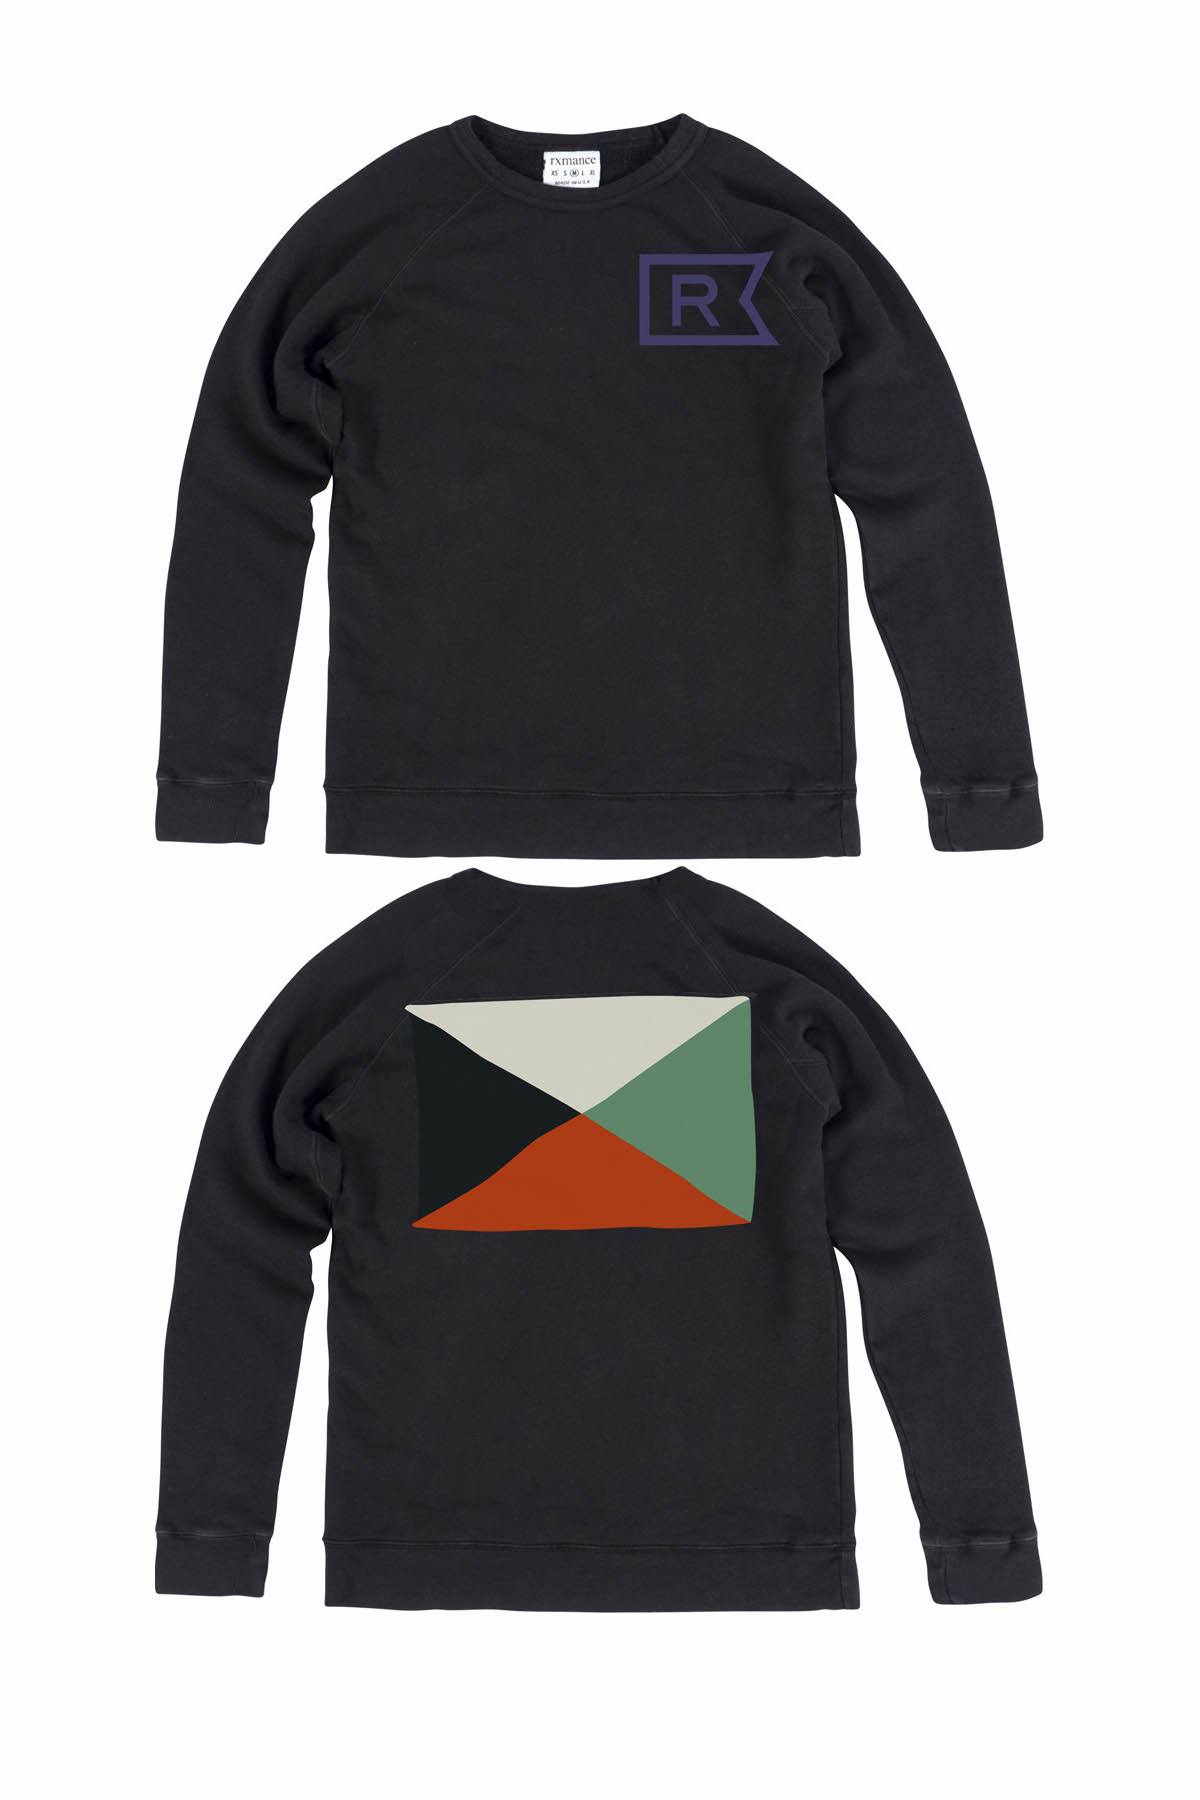 Rxmance Unisex Black Flag Sweatshirt